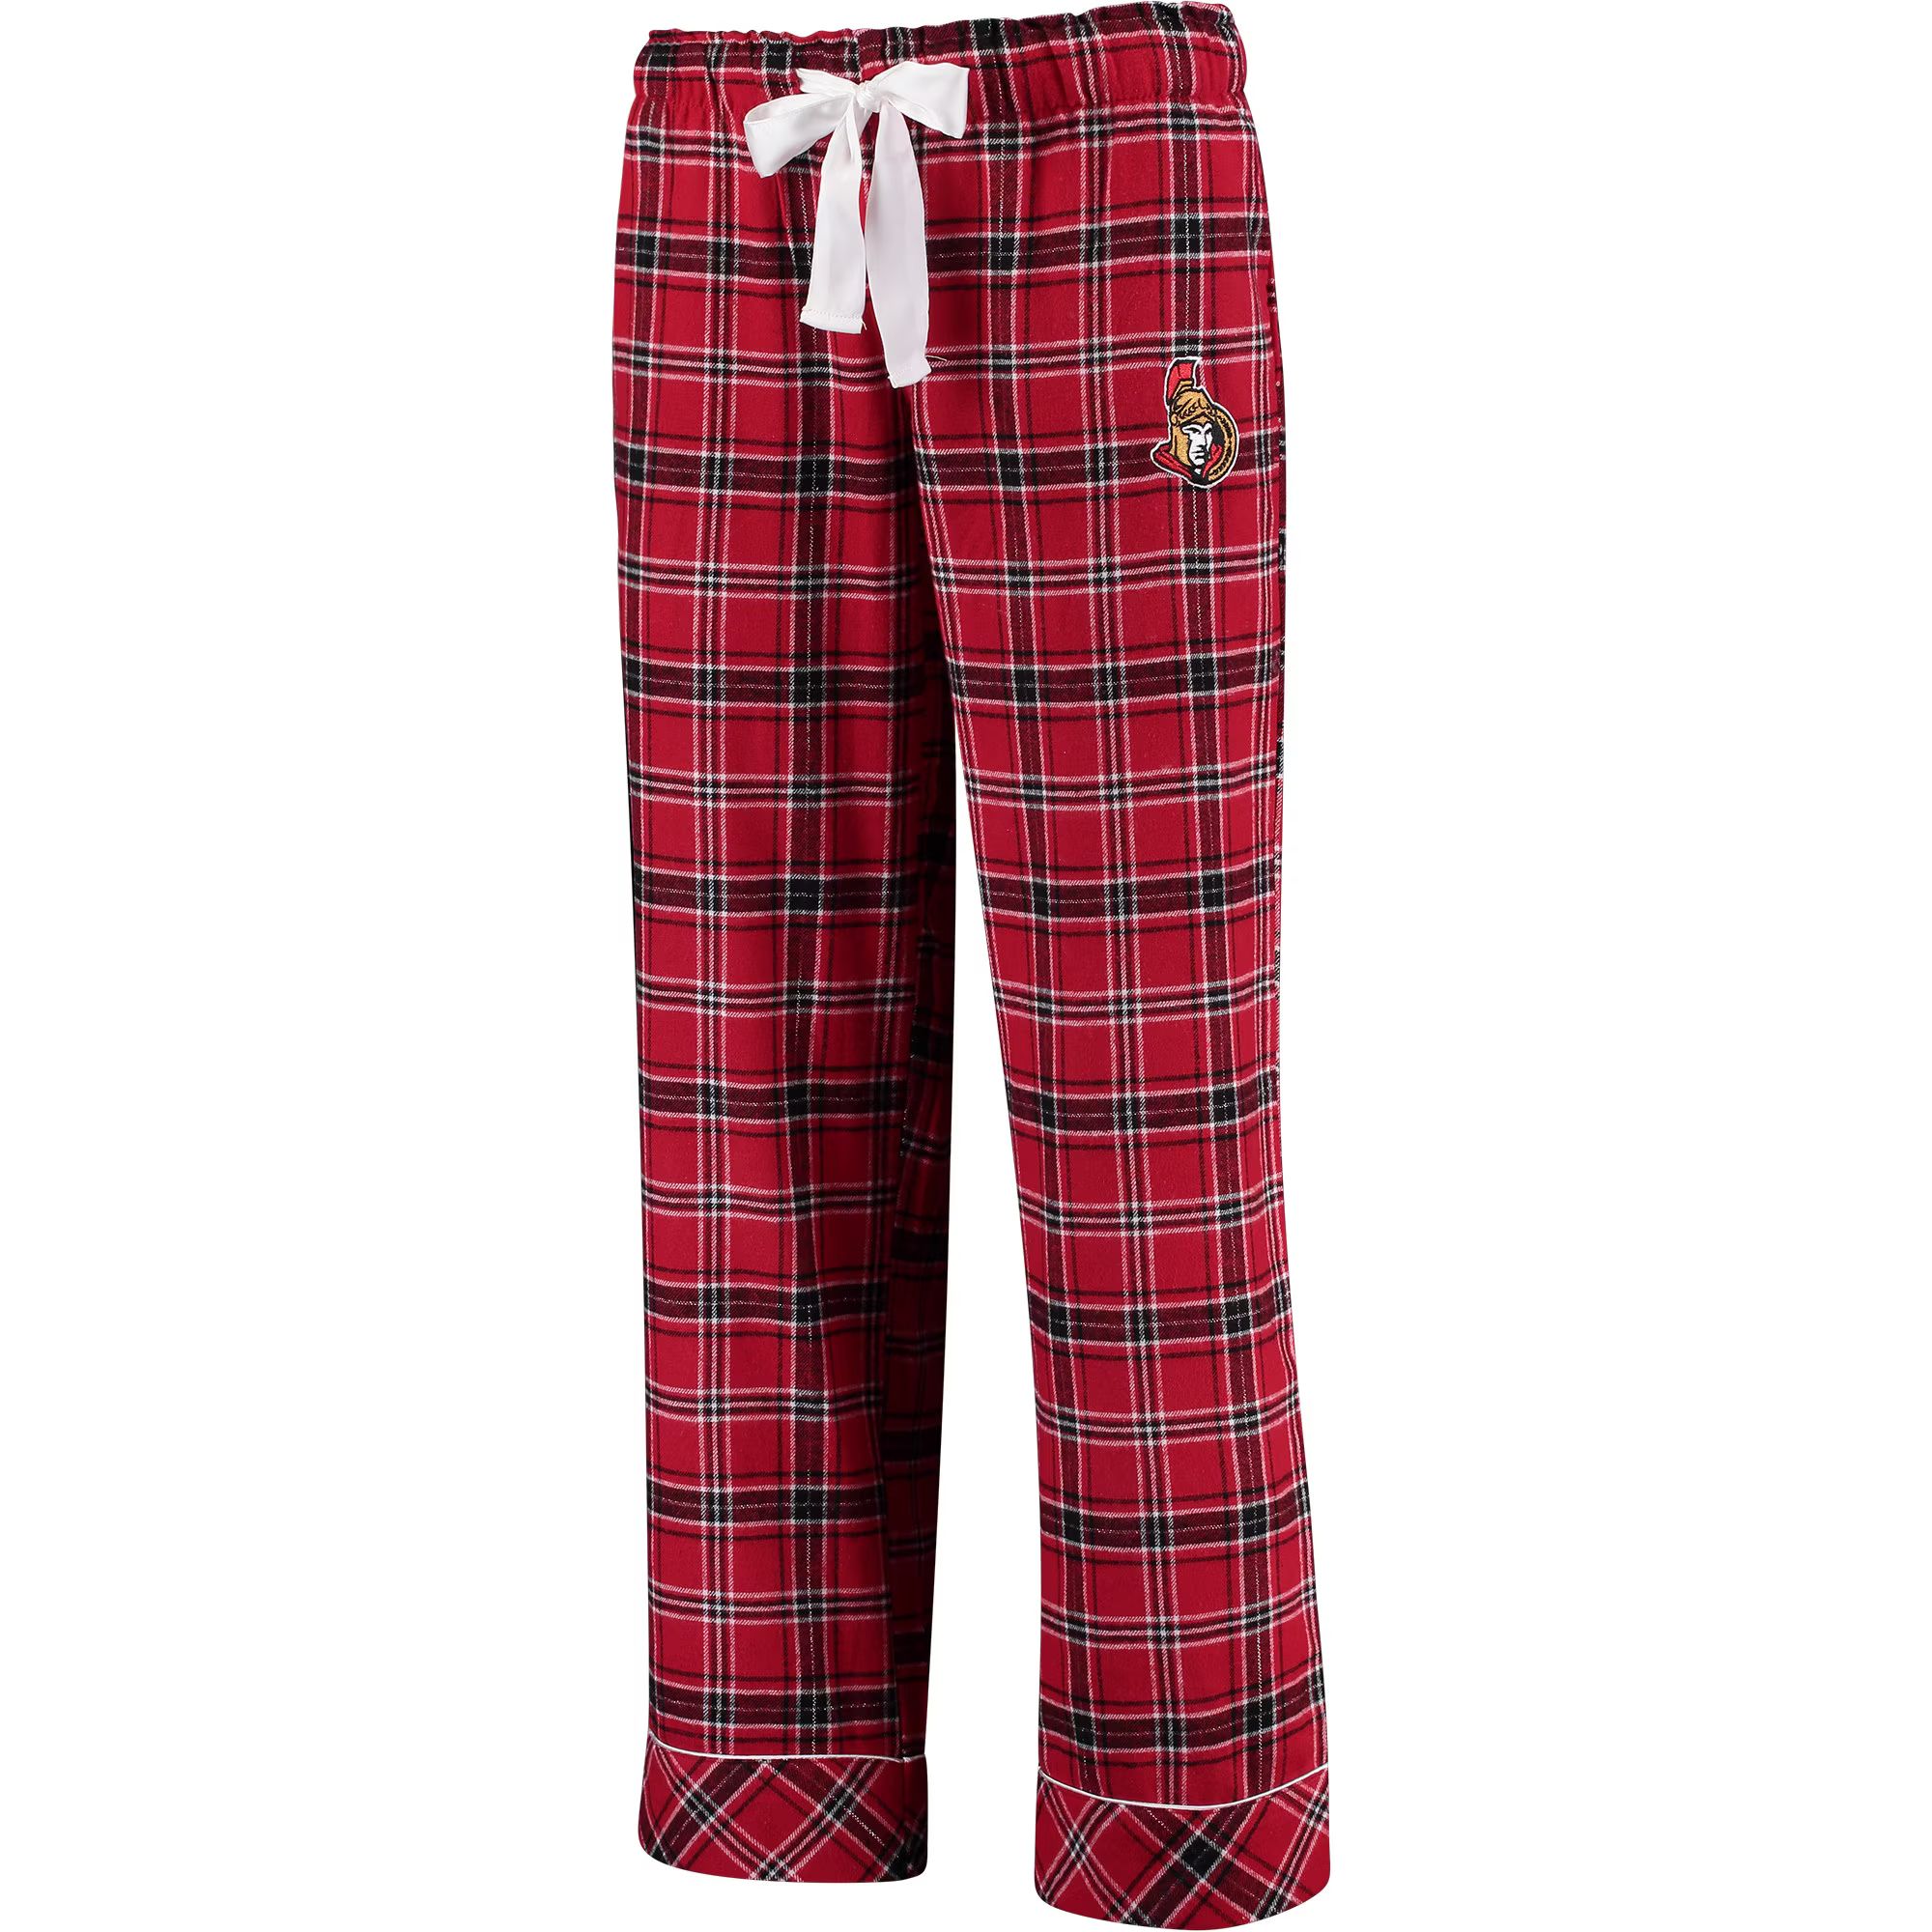 Ottawa Senators Concepts Sport Women's Captivate Plaid Flannel Pajama Pants - Red/Black | Fanatics.com